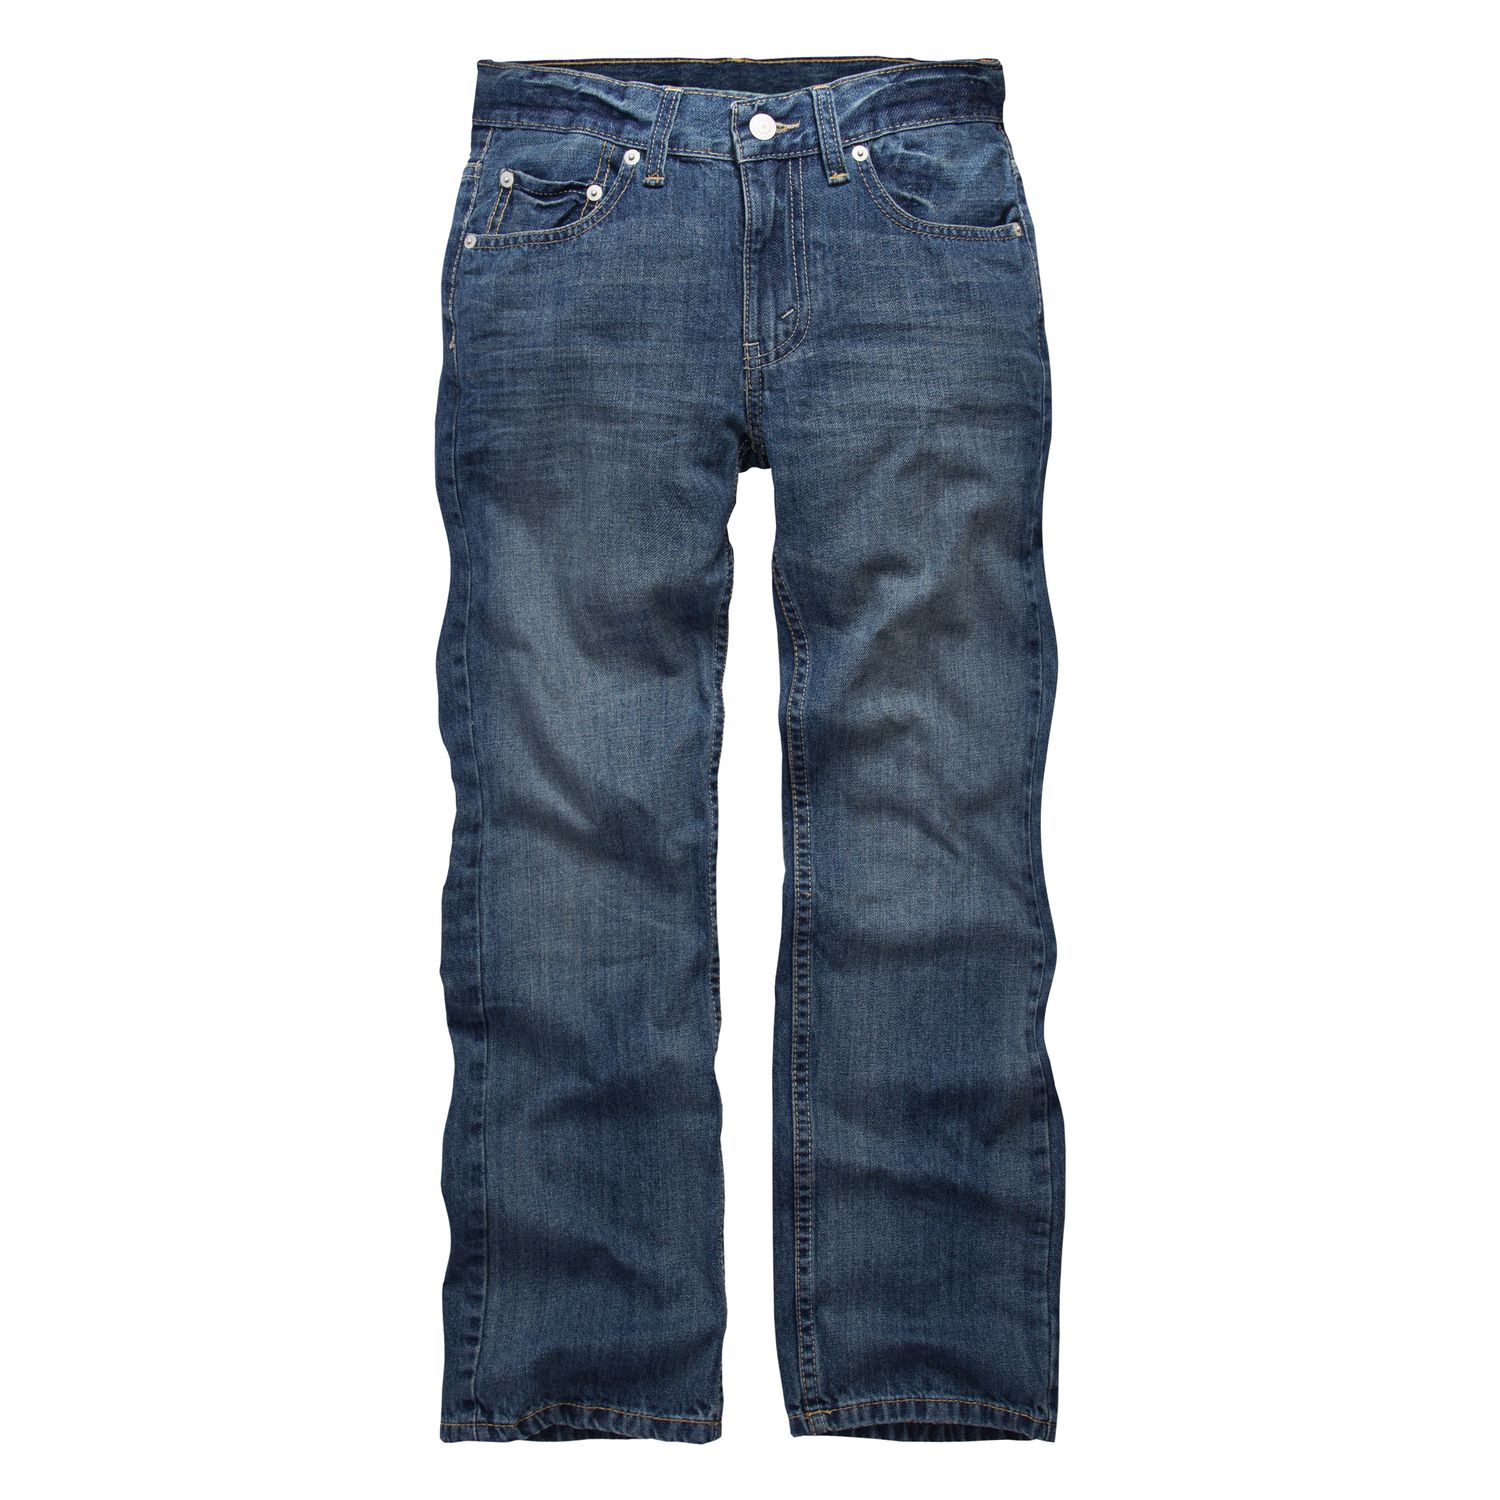 levi jeans 42 inch waist